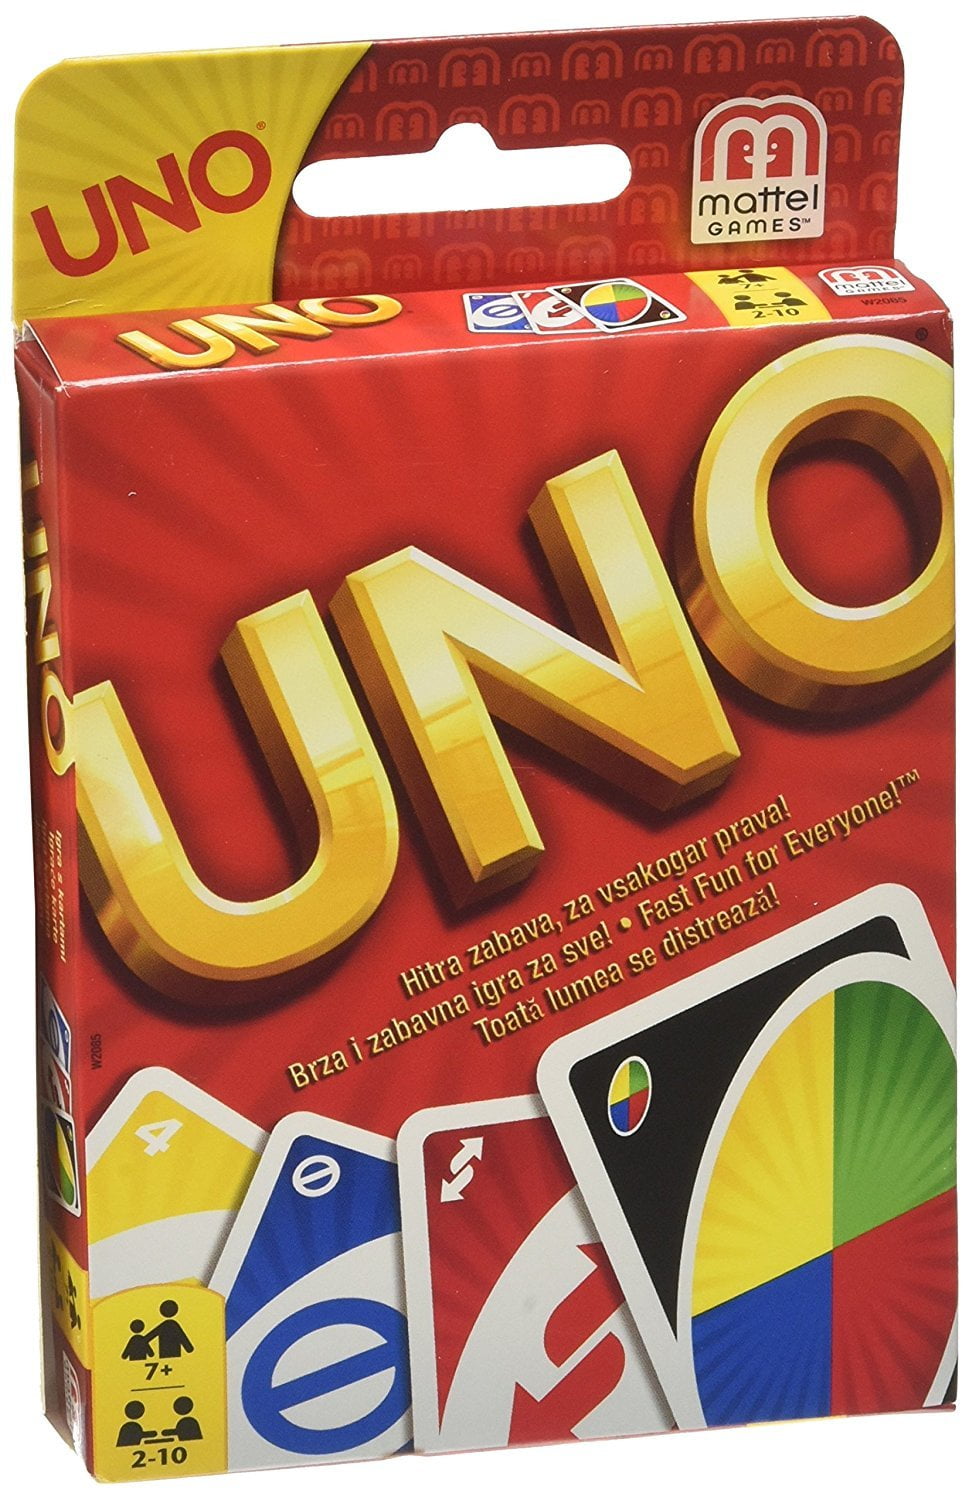 Uno Card Game - Walmart.com - Walmart.com